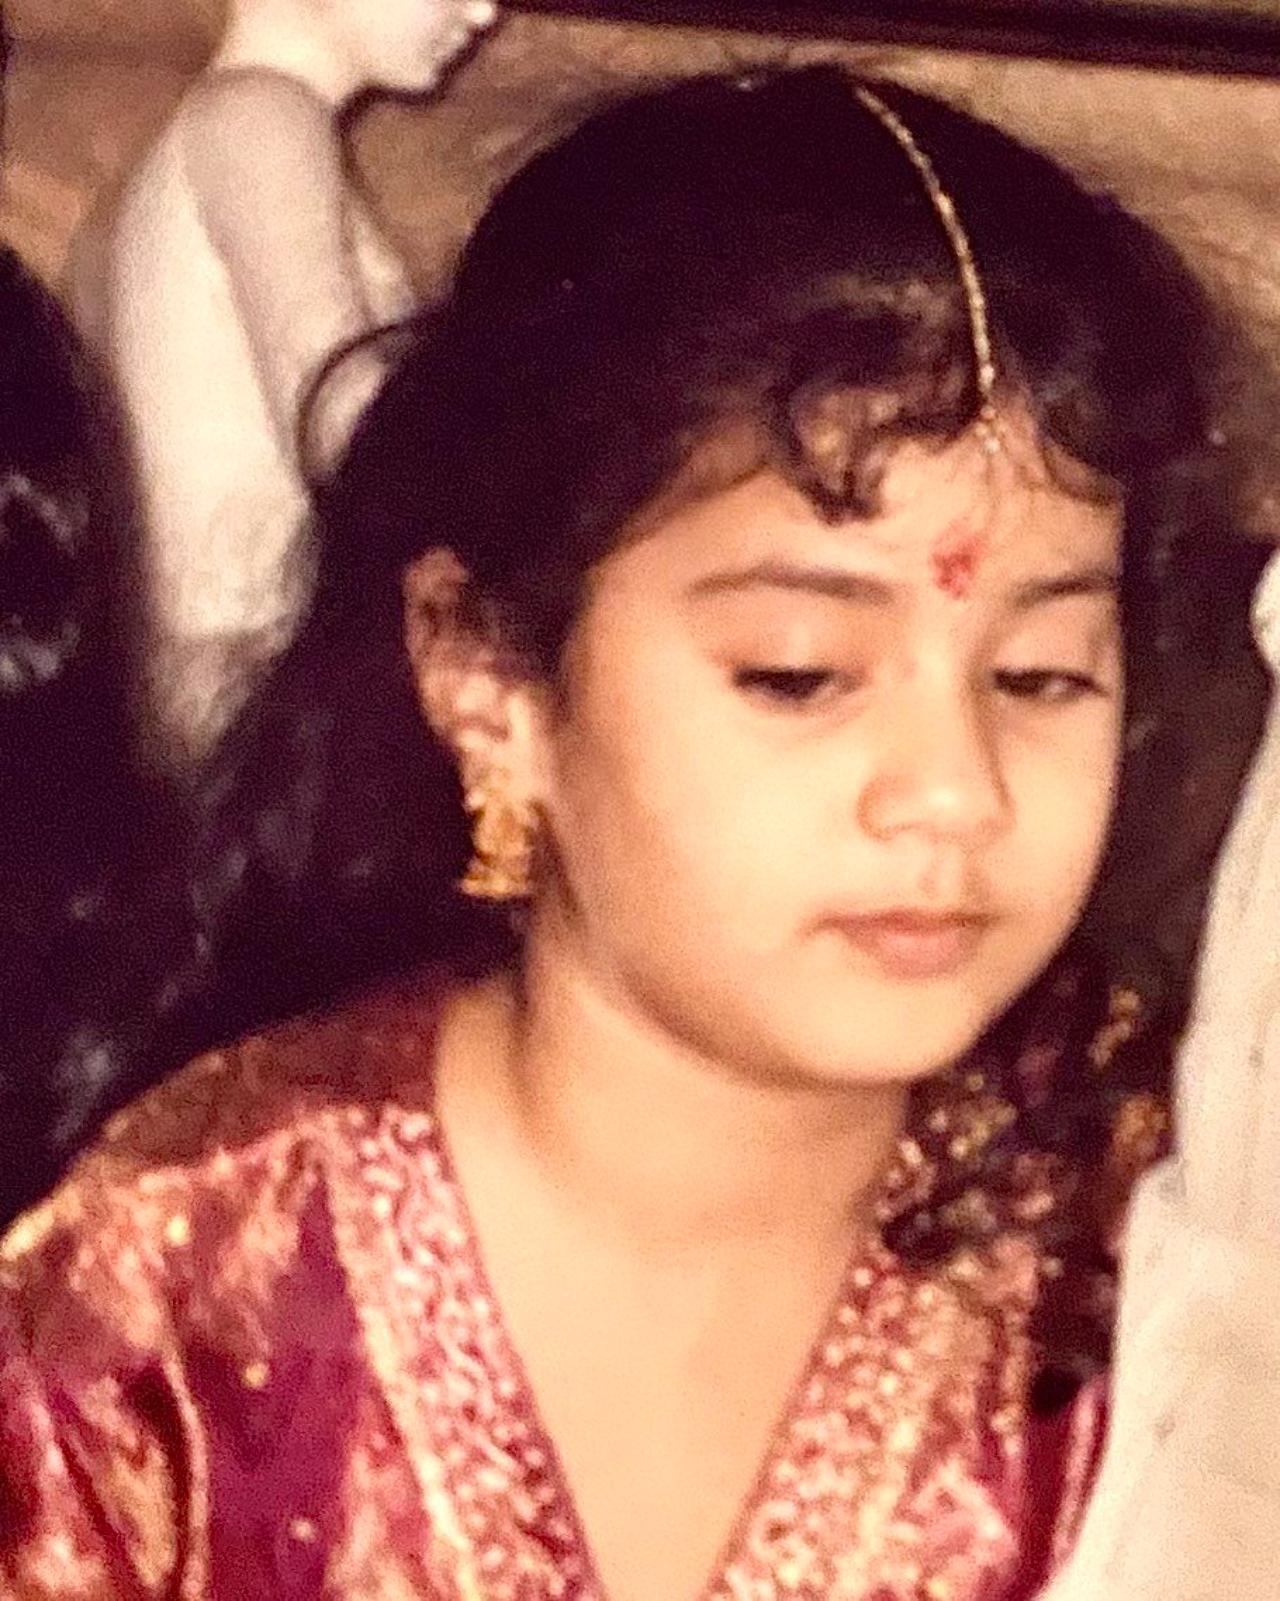 Janhvi Kapoor from her childhood days